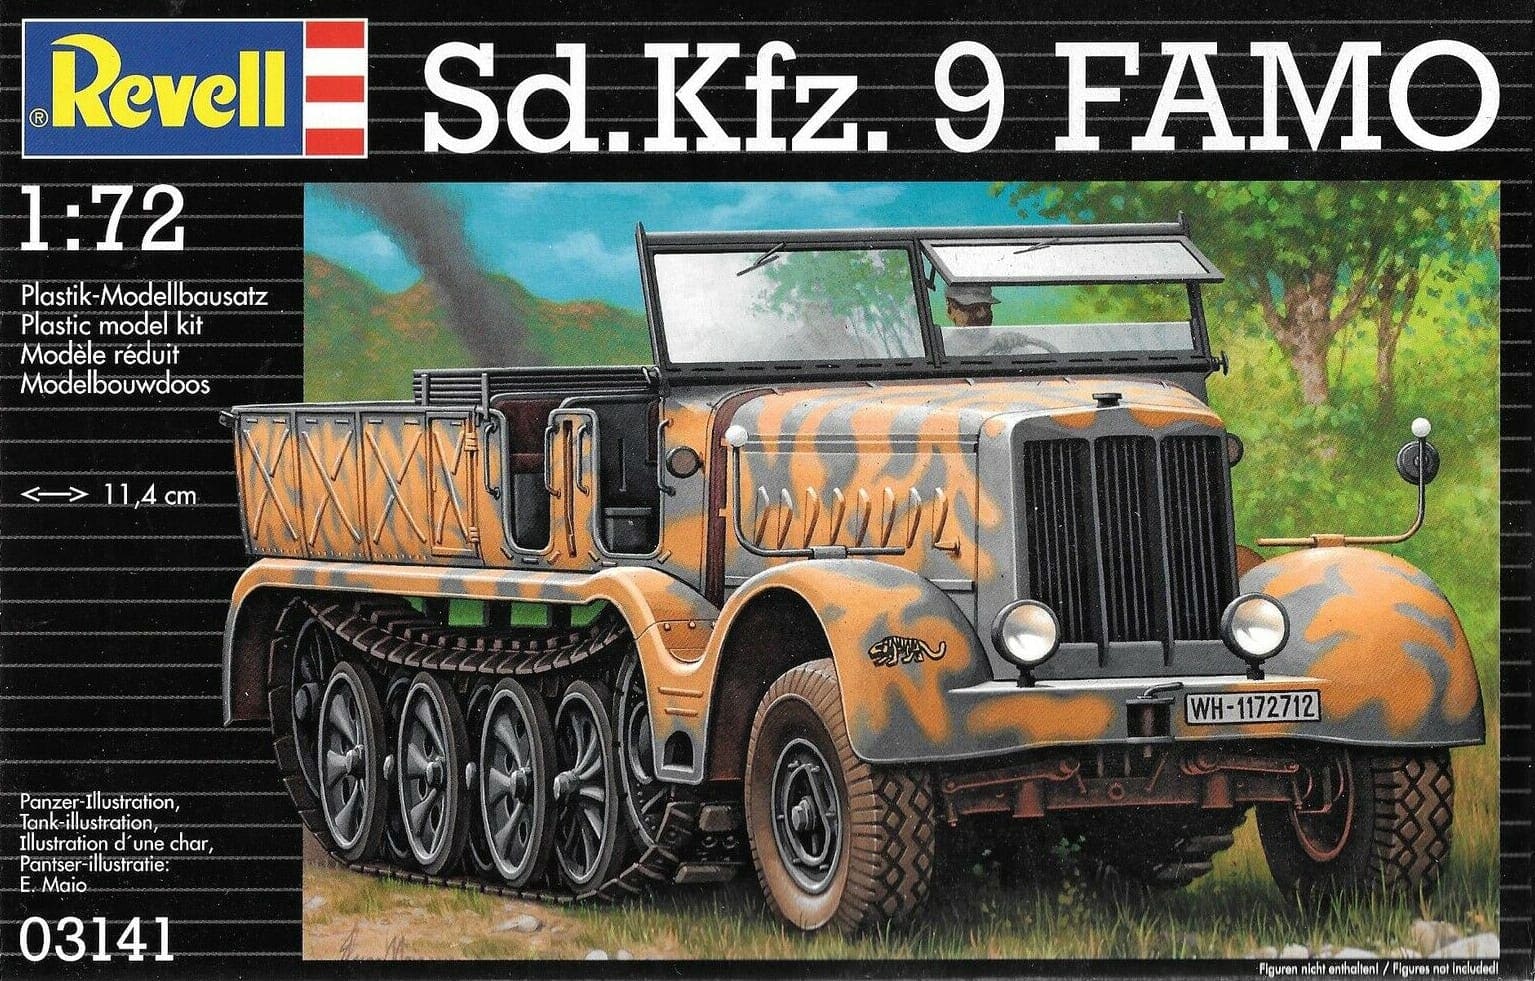 1/72 Plastikbausatz-Konvolut 3 X Deutsches Sd.Kfz.9 FAMO WWII REVELL 03141 OVP !